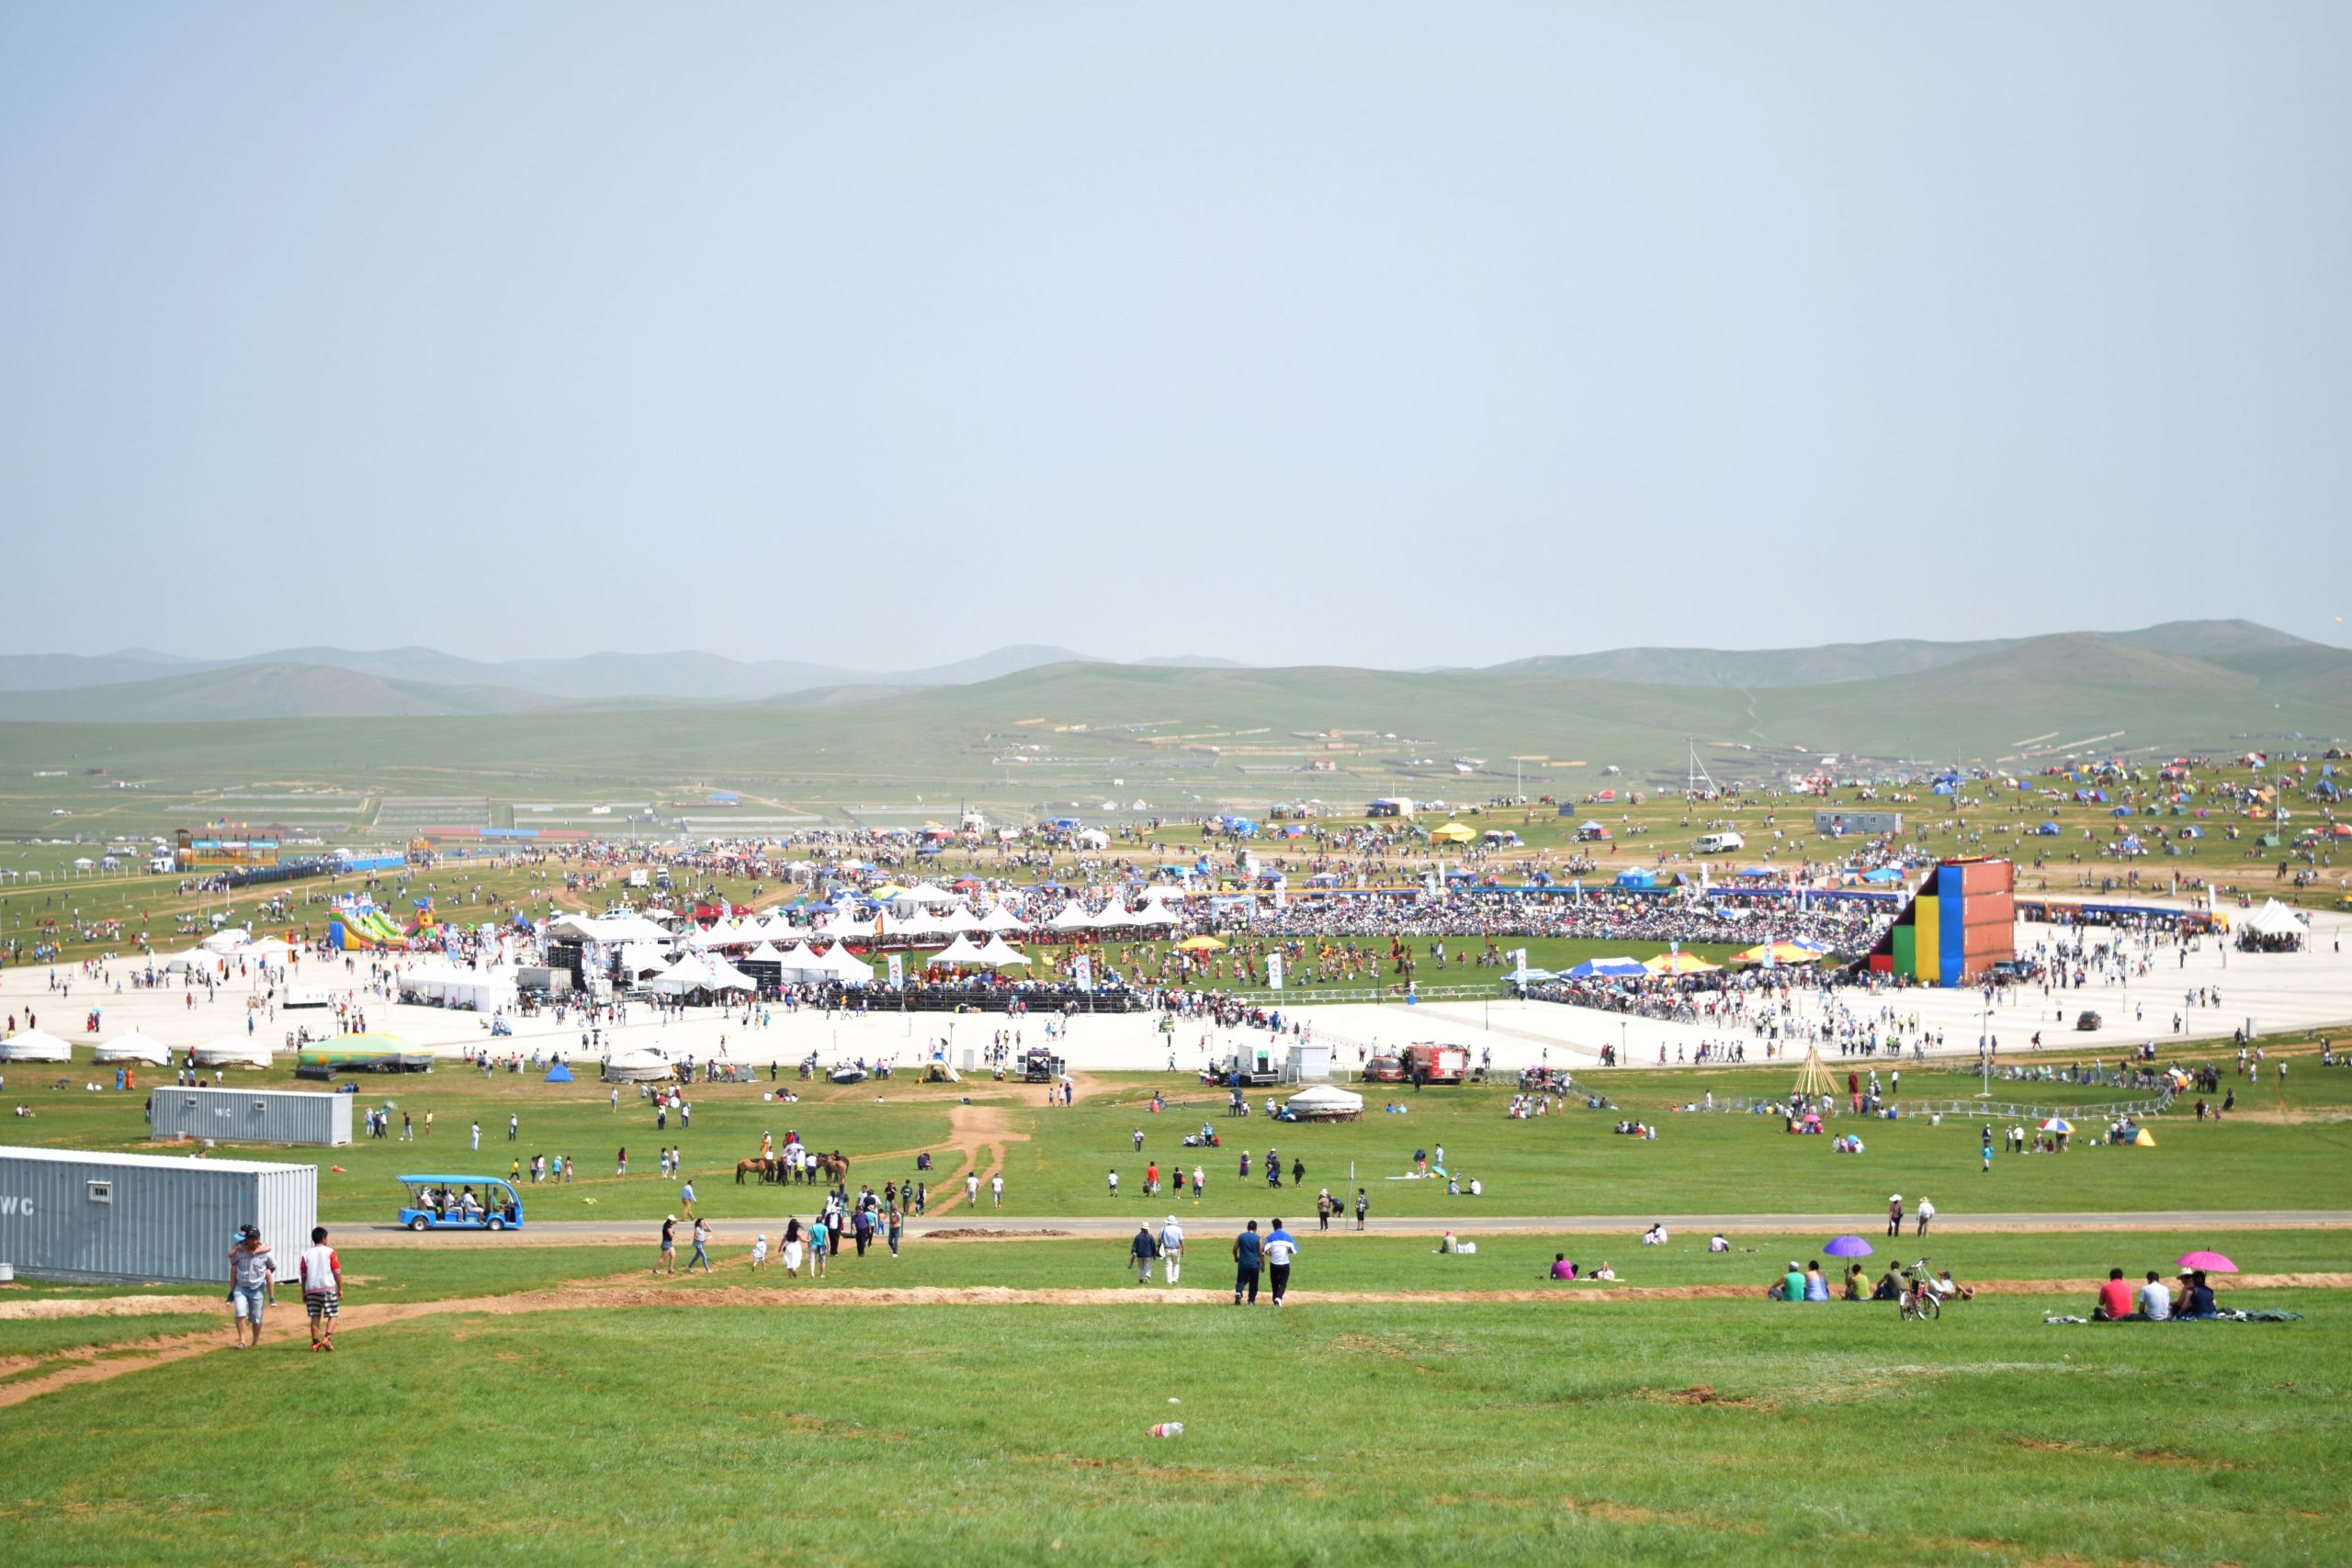 Mangolia’s Naadam Festival